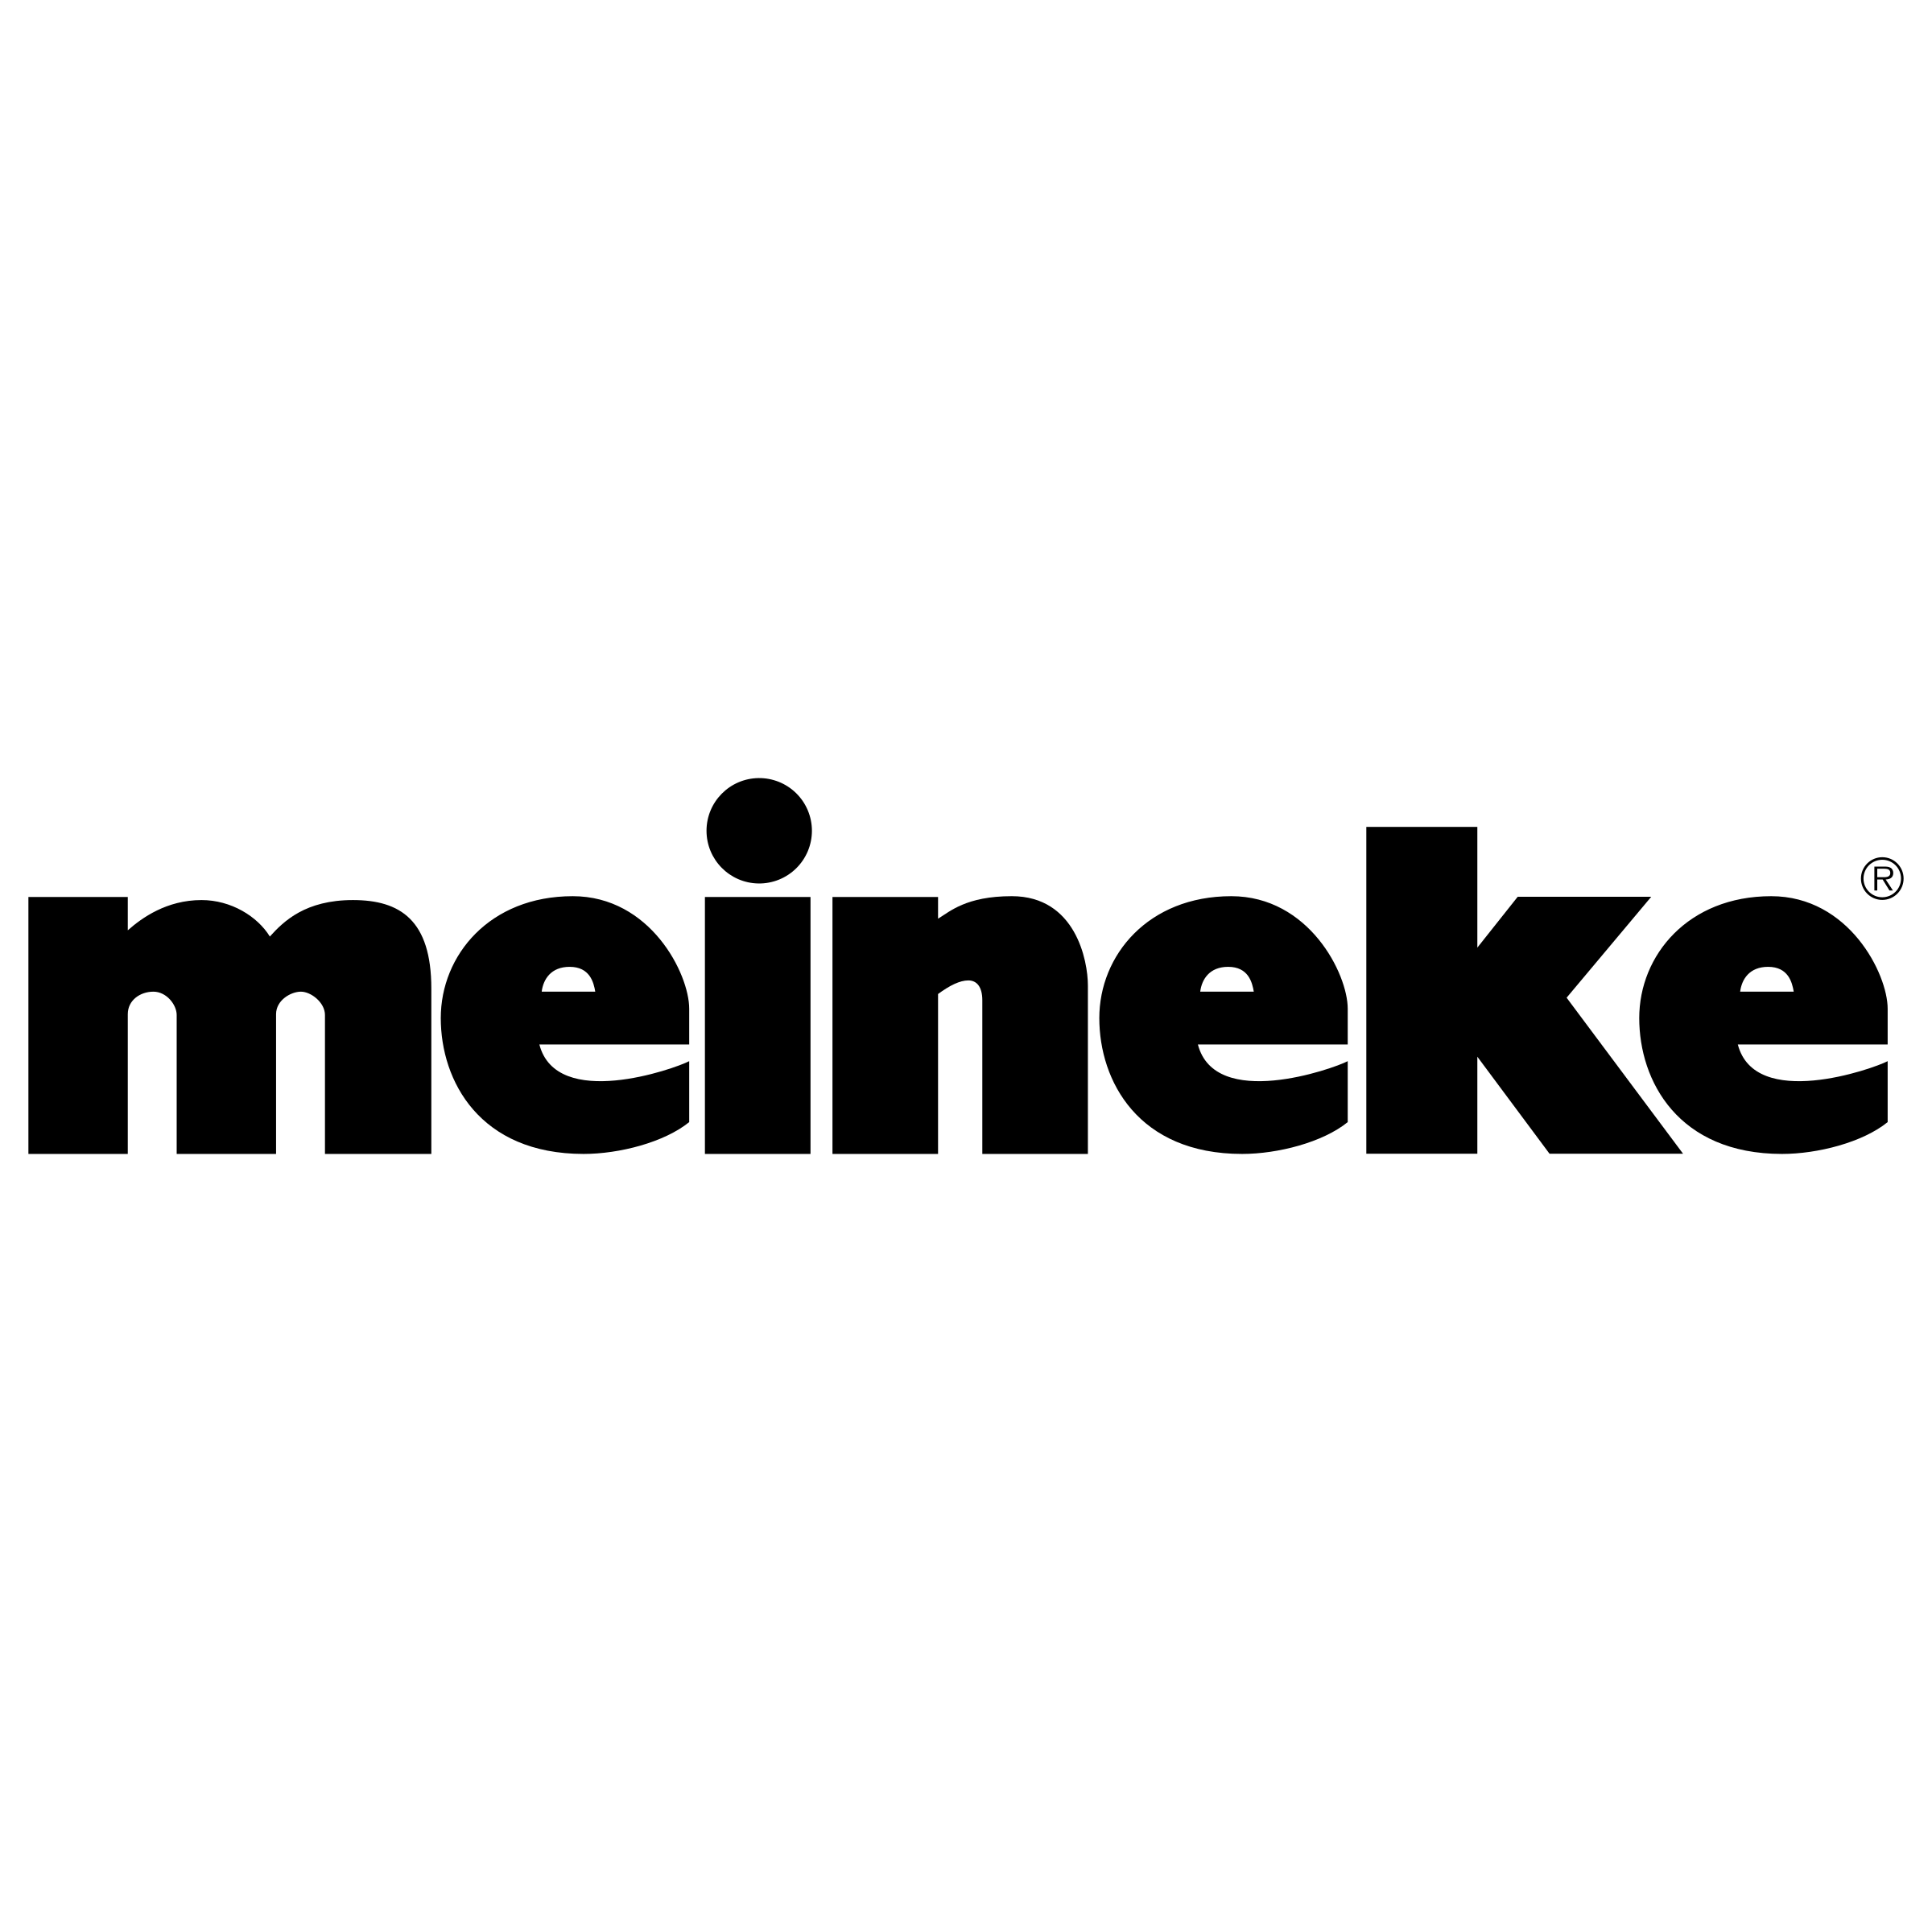 Meineke Logo - Meineke Logo PNG Transparent & SVG Vector - Freebie Supply